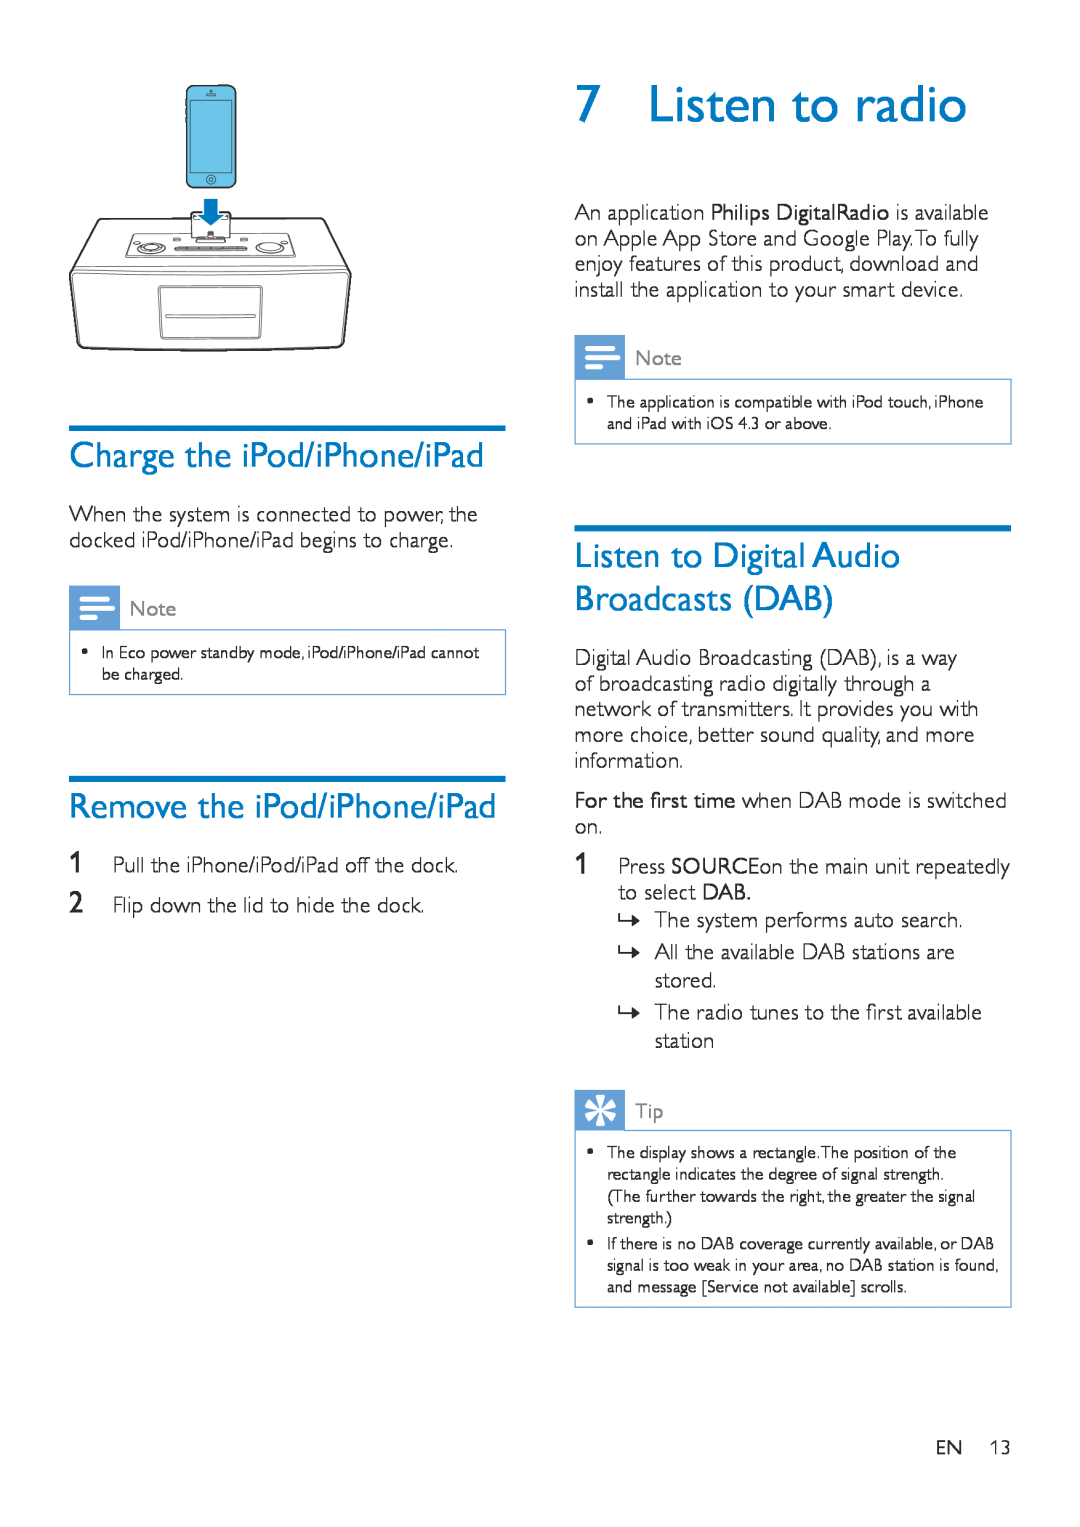 Philips DTB855 user manual Listen to radio, Charge the iPod/iPhone/iPad, Remove the iPod/iPhone/iPad 